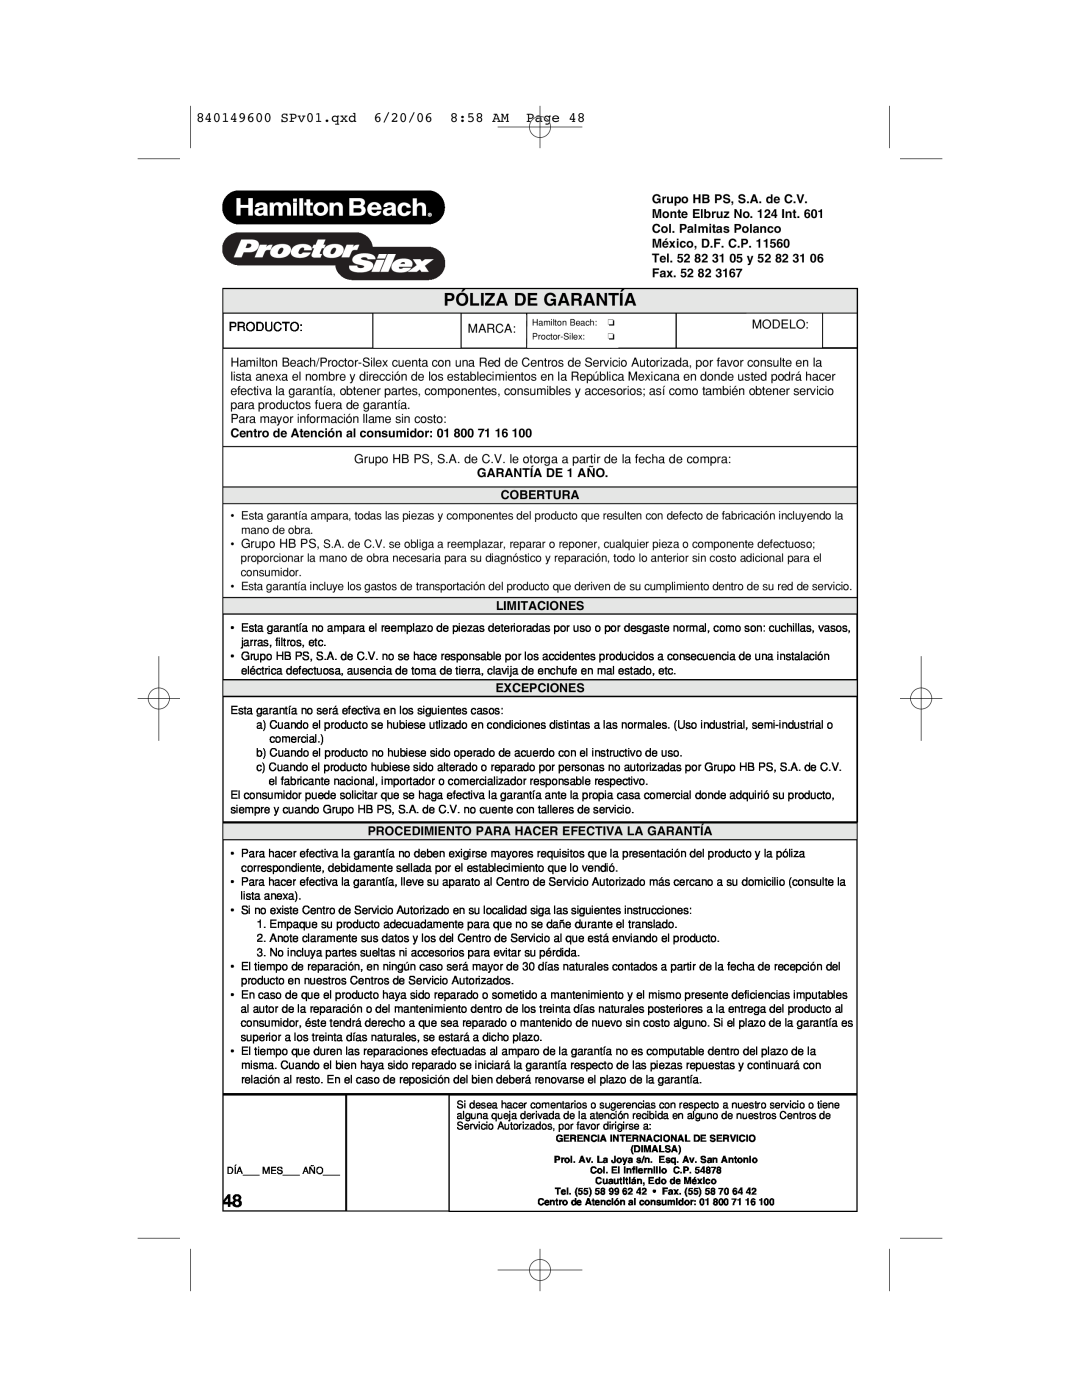 Hamilton Beach manual Póliza De Garantía, 840149600 SPv01.qxd 6/20/06 8 58 AM Page, Grupo HB PS, S.A. de C.V, Fax. 52 82 